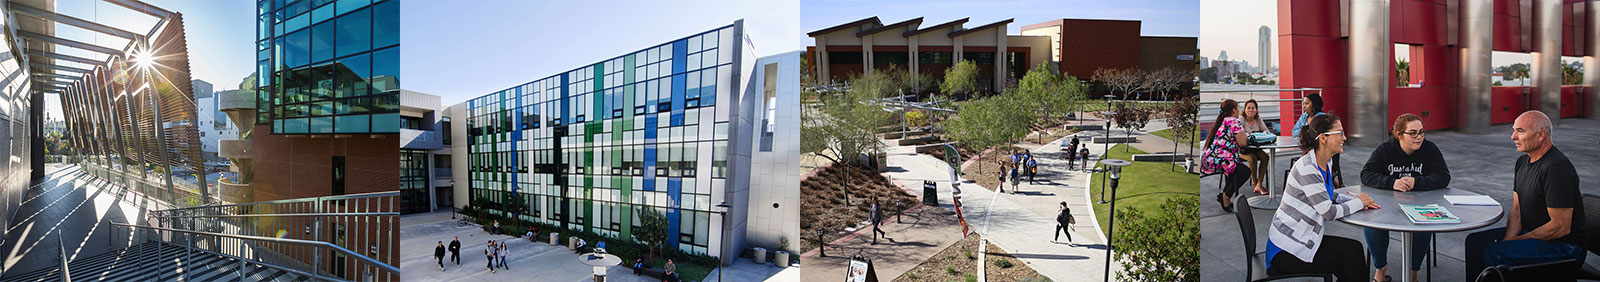 City, Mesa, Miramar, and Continuing Education campuses